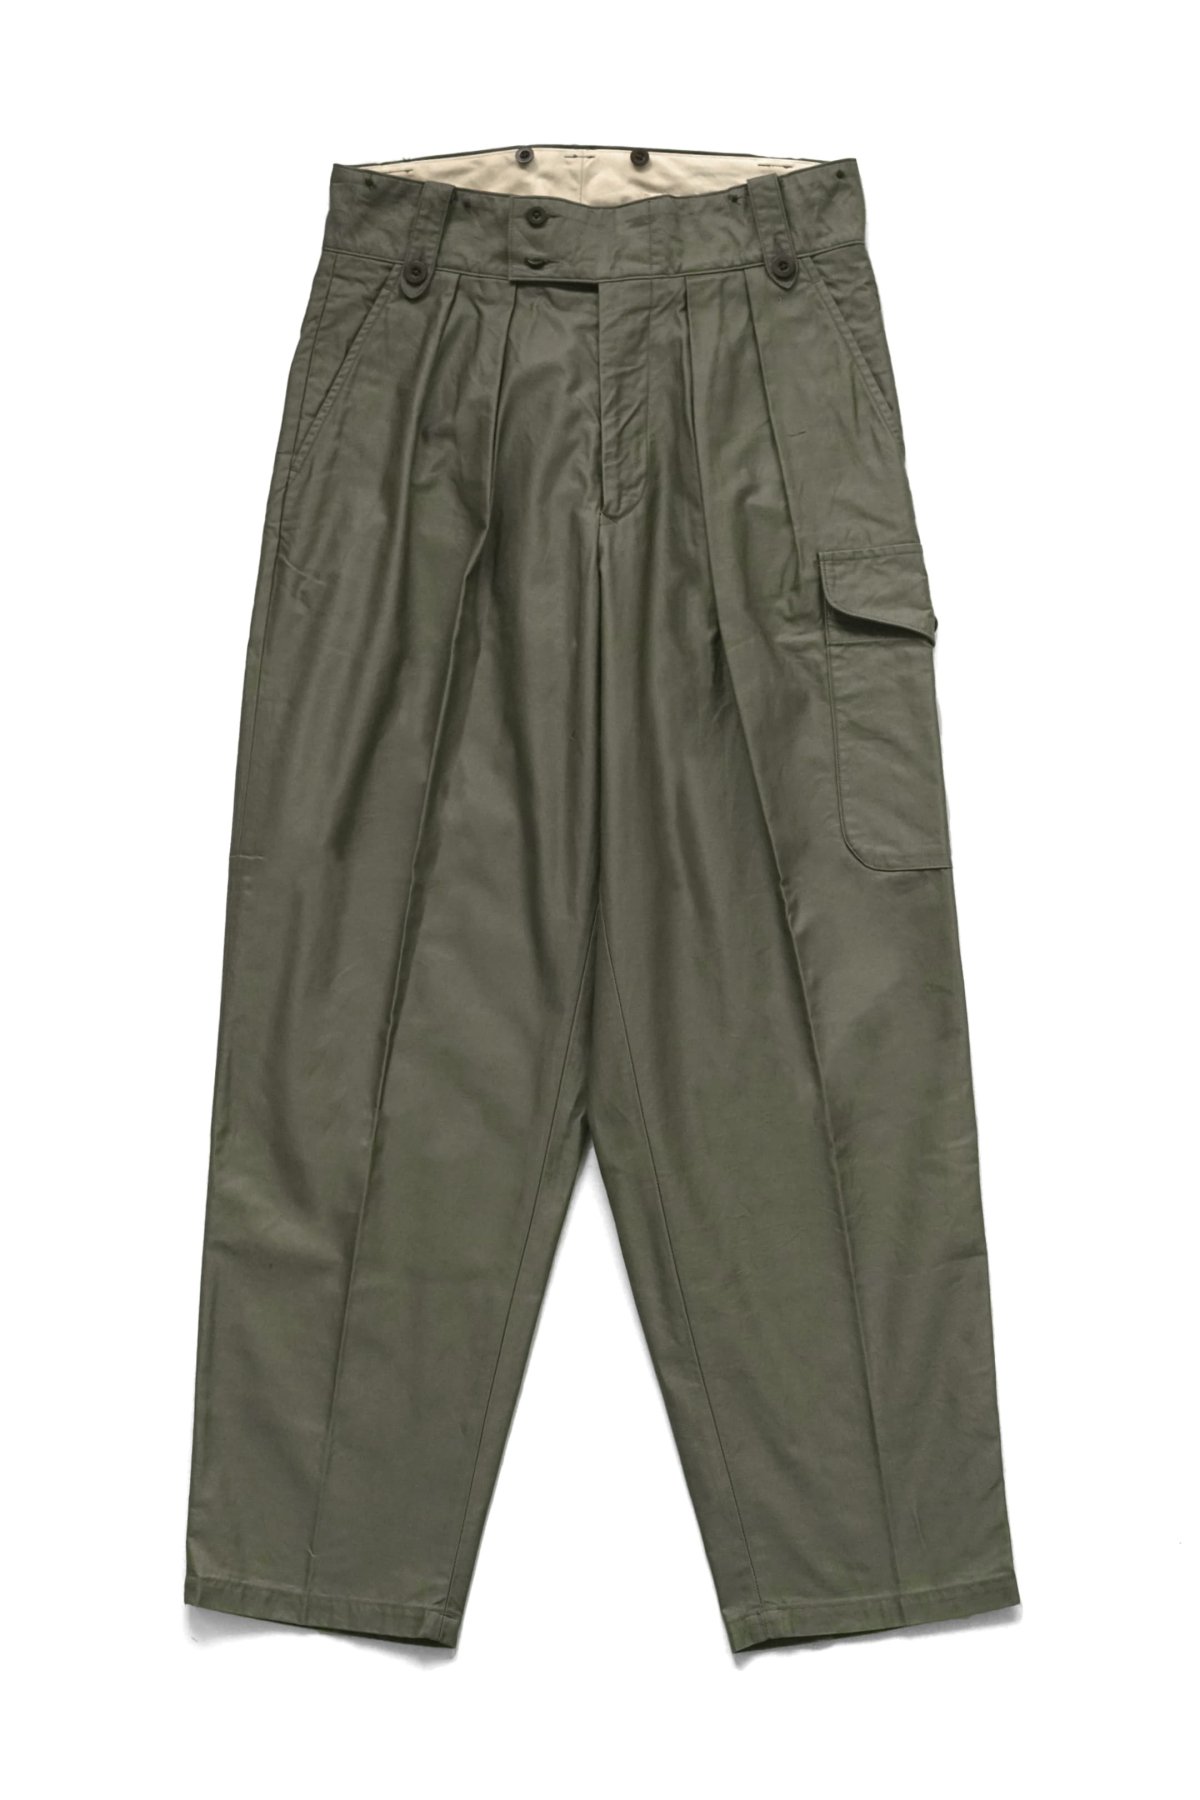 ◯Nigel Cabourn - 50'S BATTLE DRESS PANT - GREEN